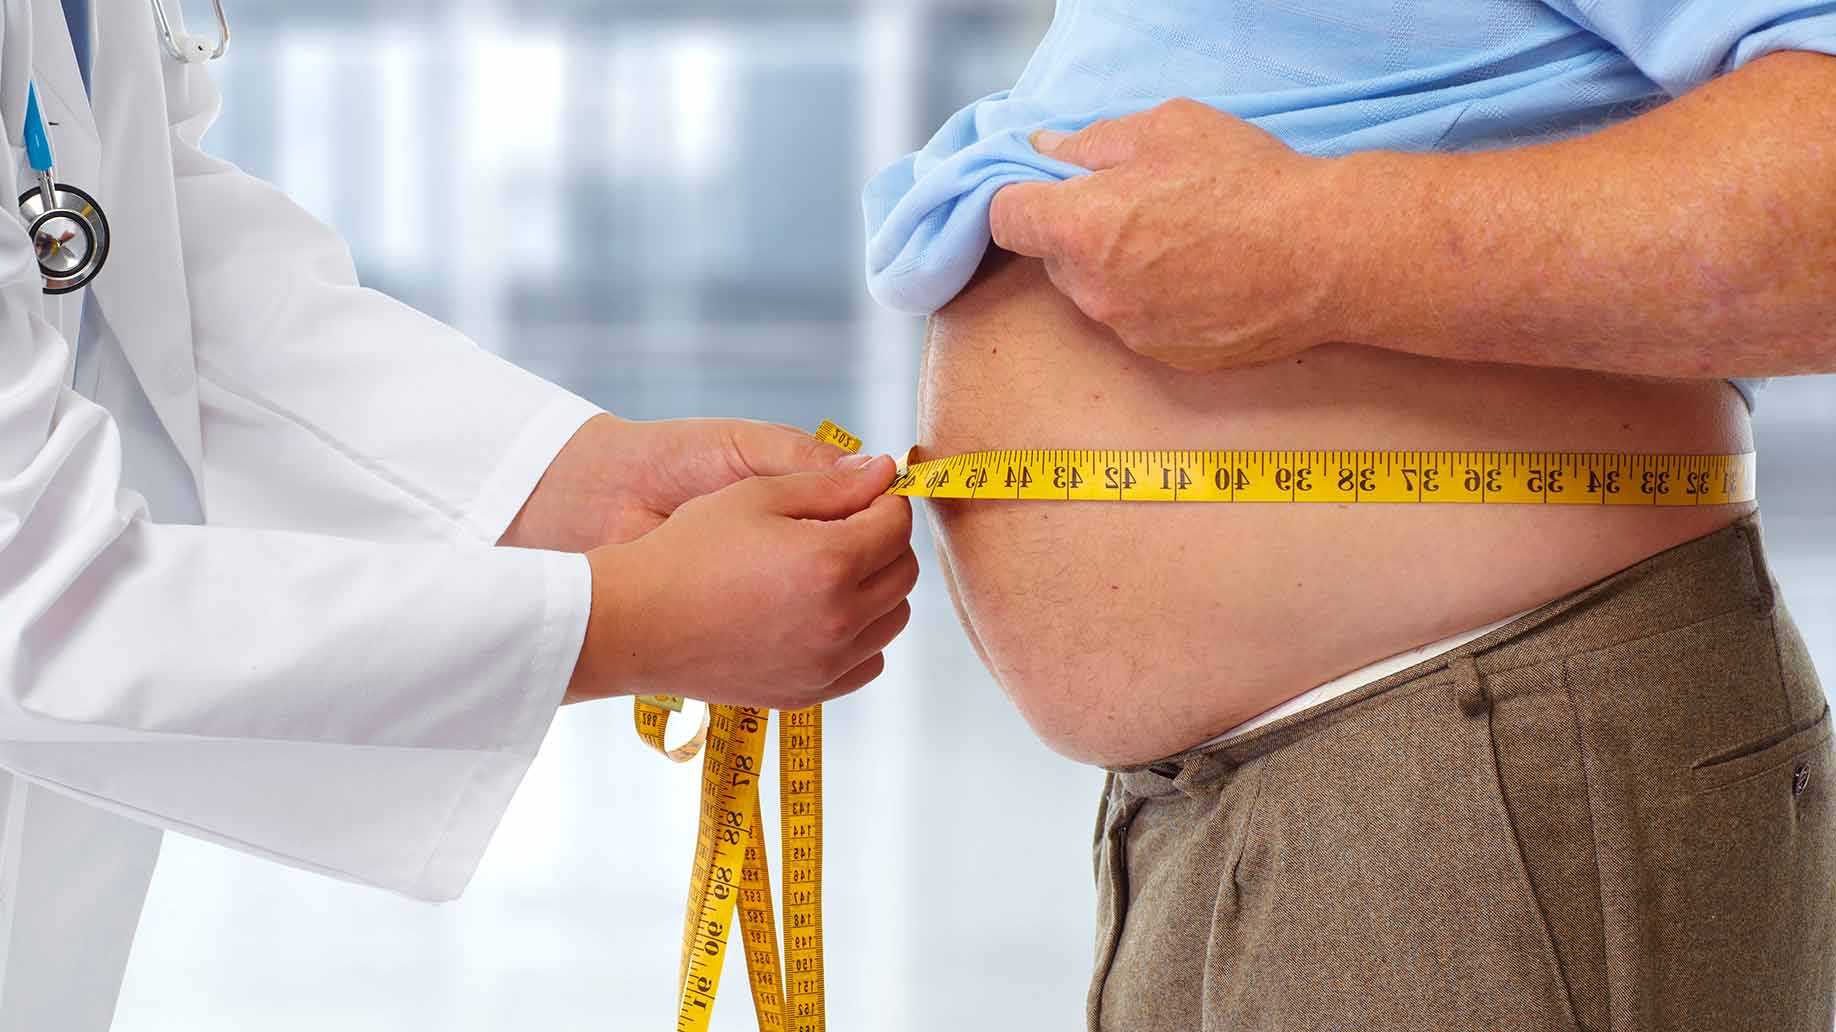 type 2 diabetes obesity vitamin c natural health benefits